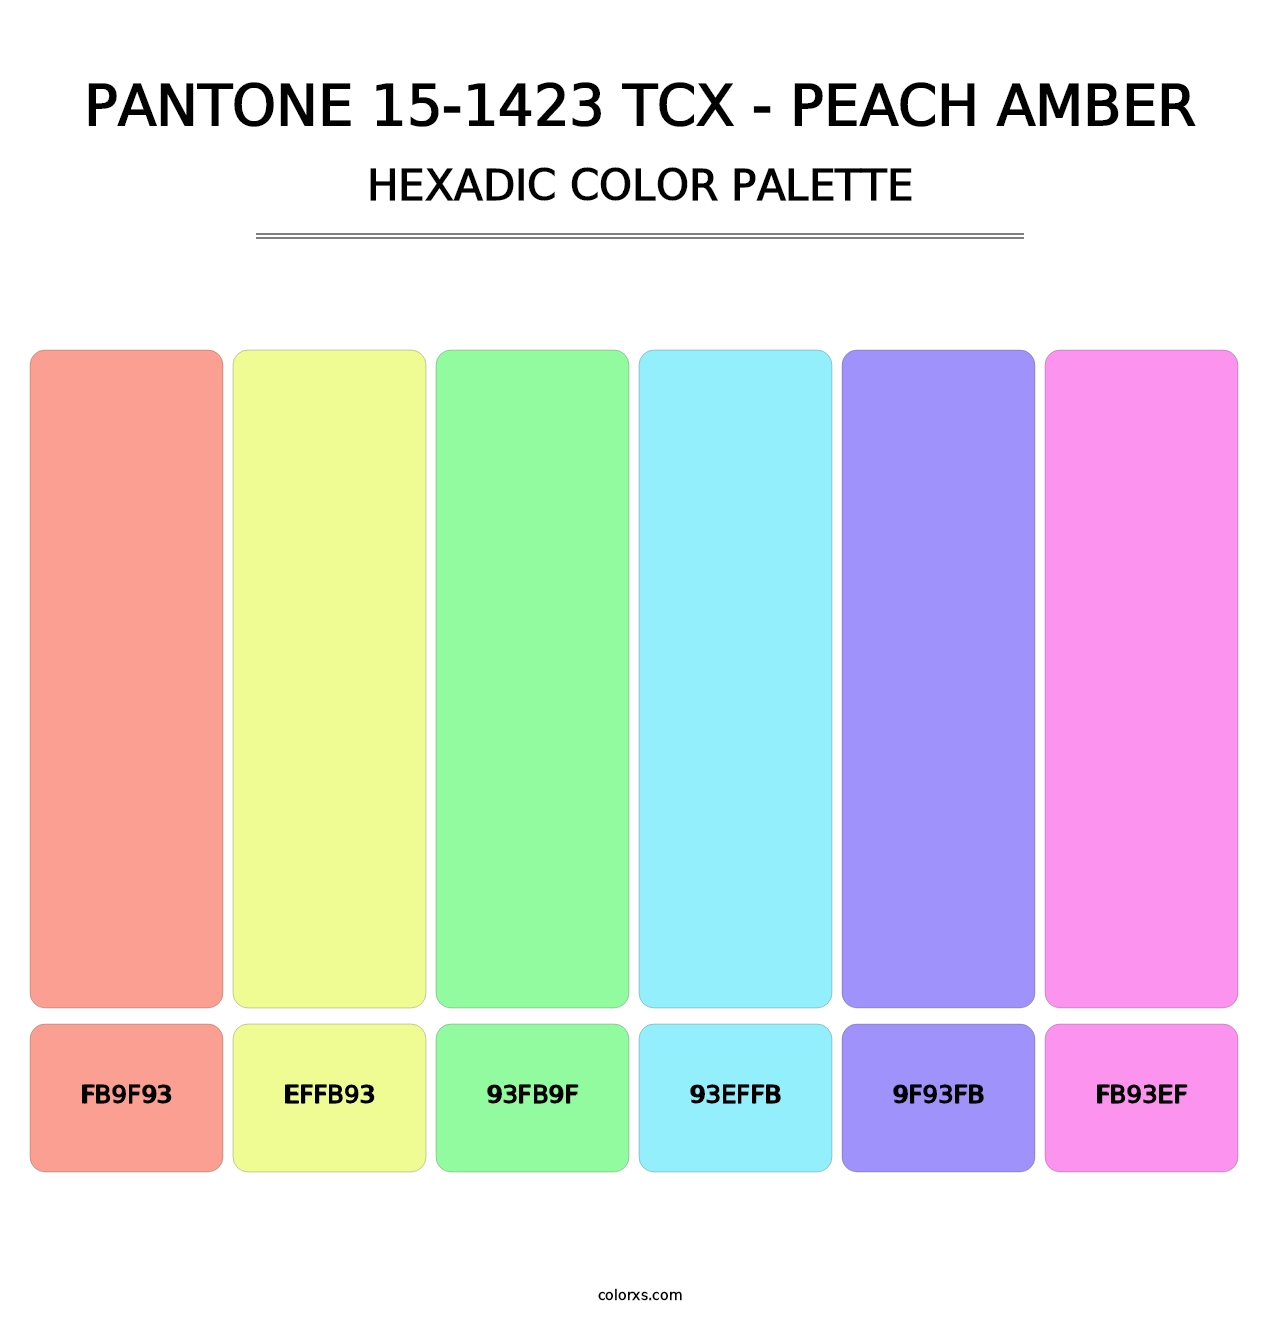 PANTONE 15-1423 TCX - Peach Amber - Hexadic Color Palette